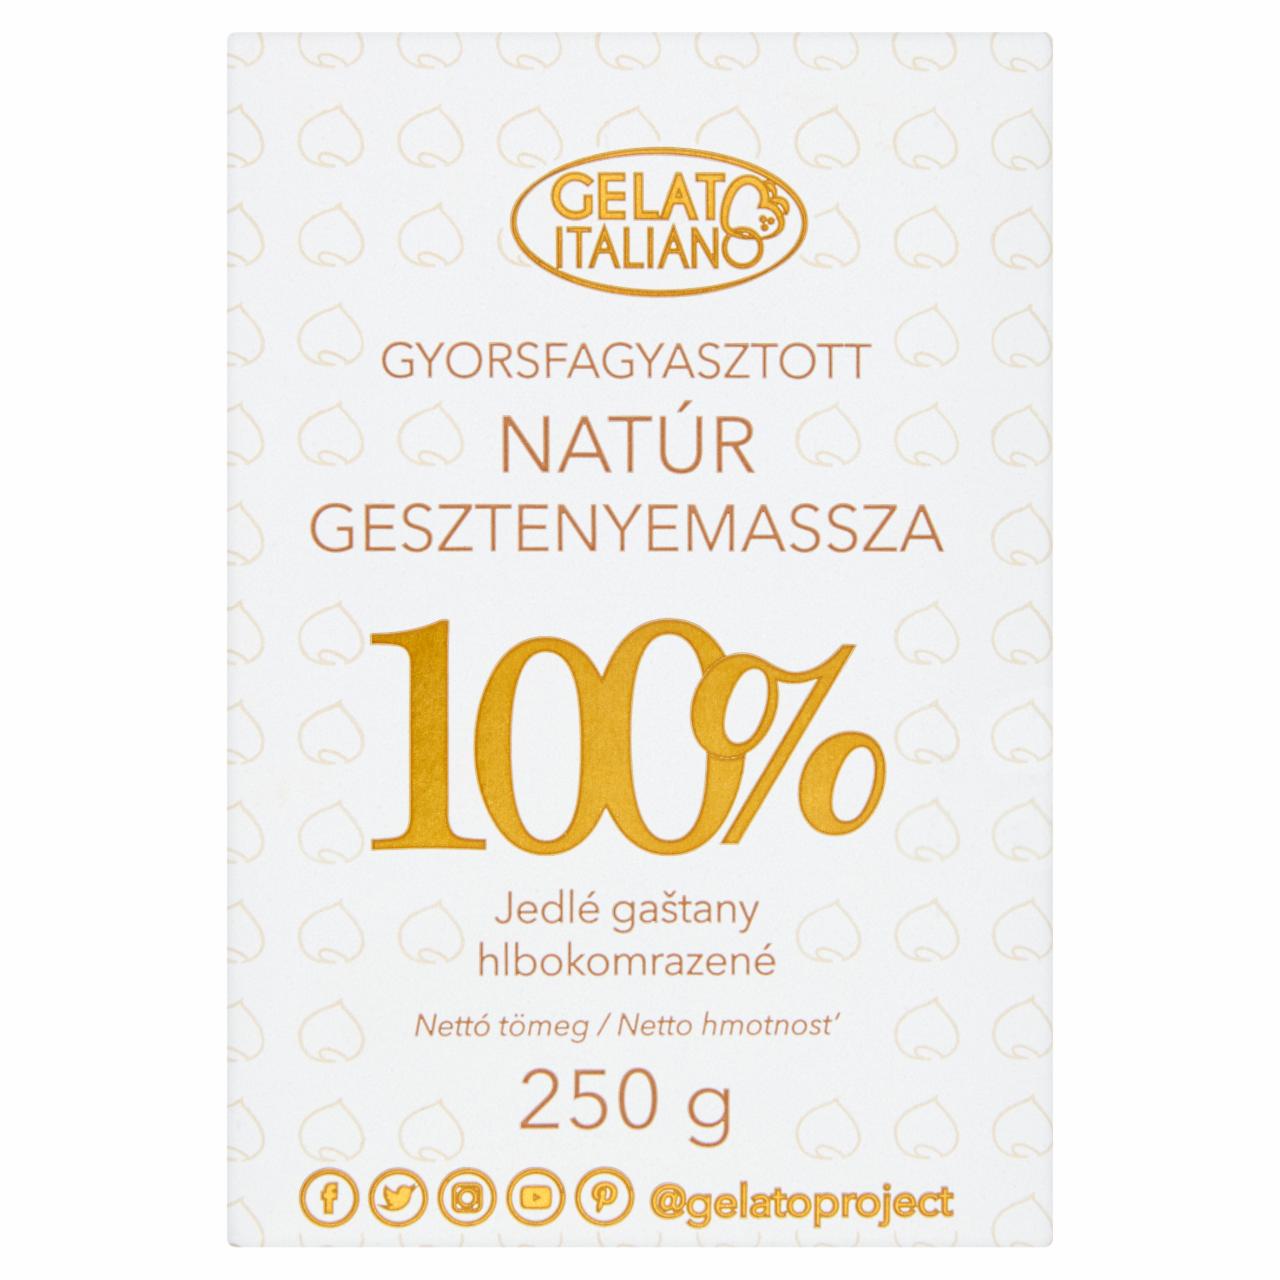 Képek - Gelato Italiano gyorsfagyasztott natúr gesztenyemassza 250 g